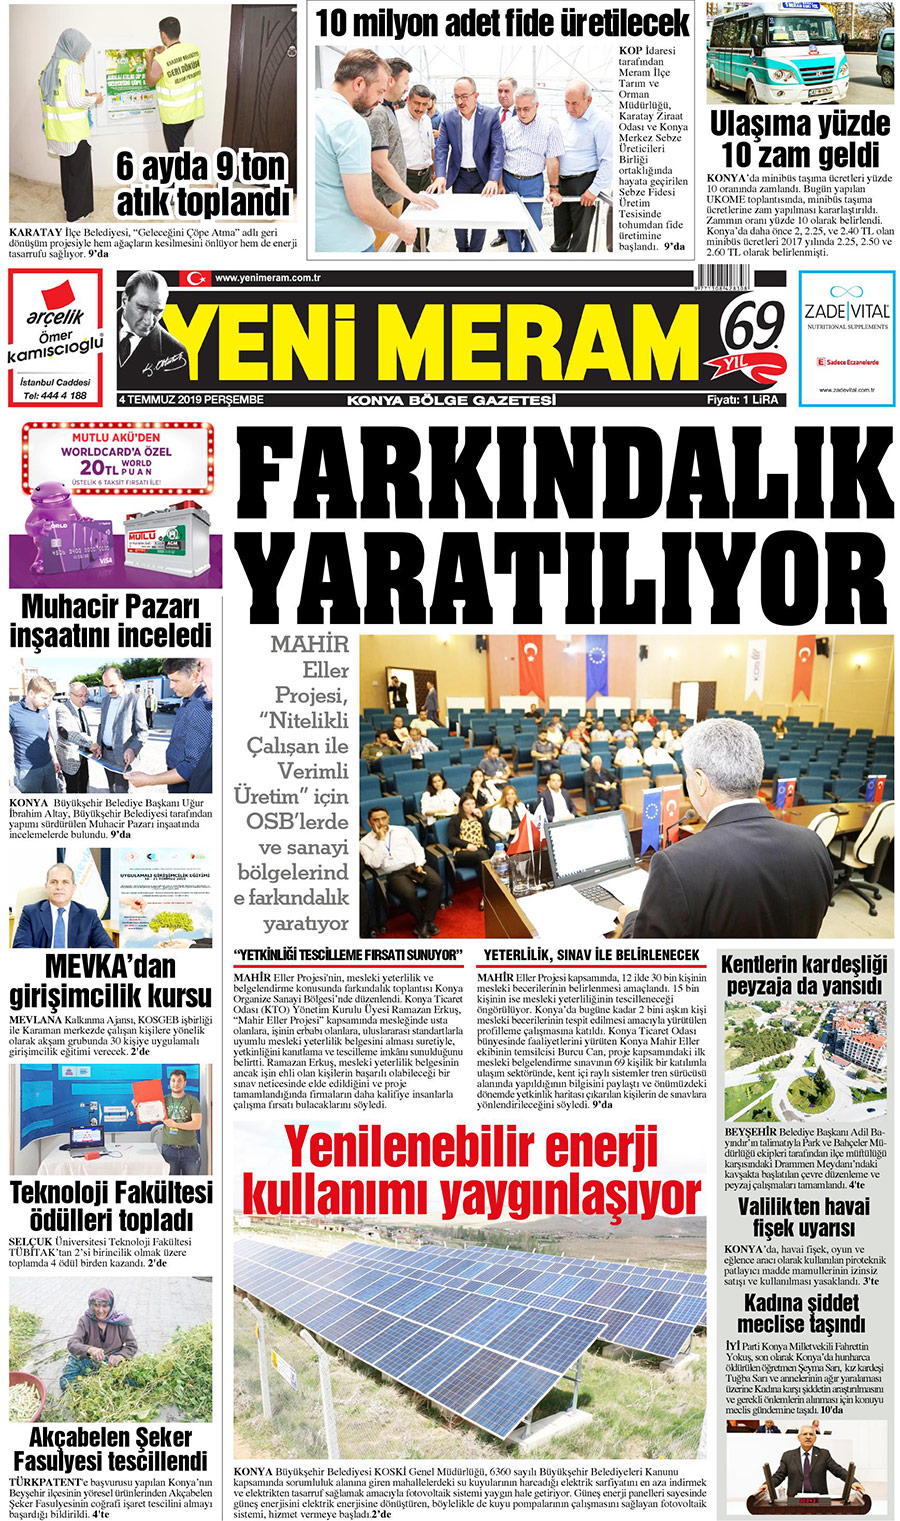 4 Temmuz 2019 Yeni Meram Gazetesi